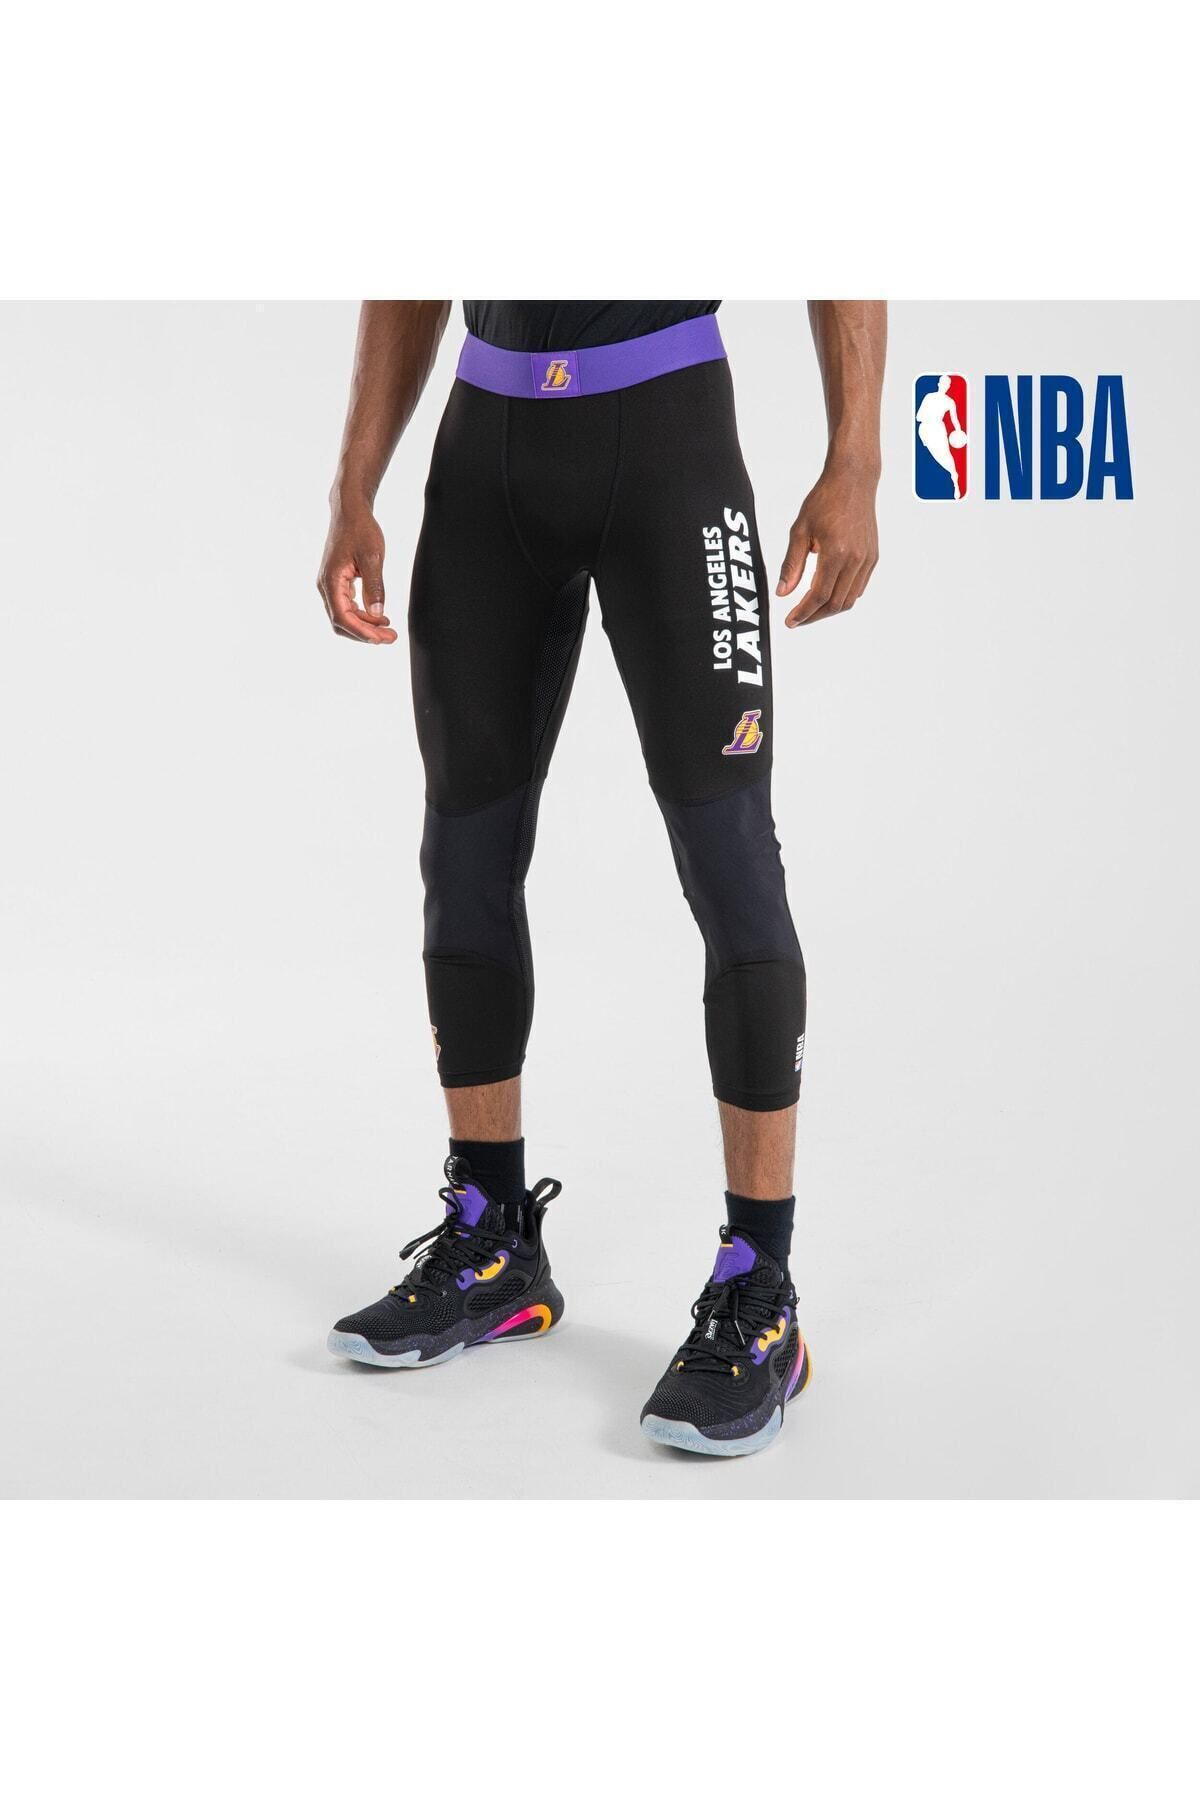 Decathlon Nba Los Angeles Lakers Adult 3/4 Basketball Tights - Black - 500  - Trendyol